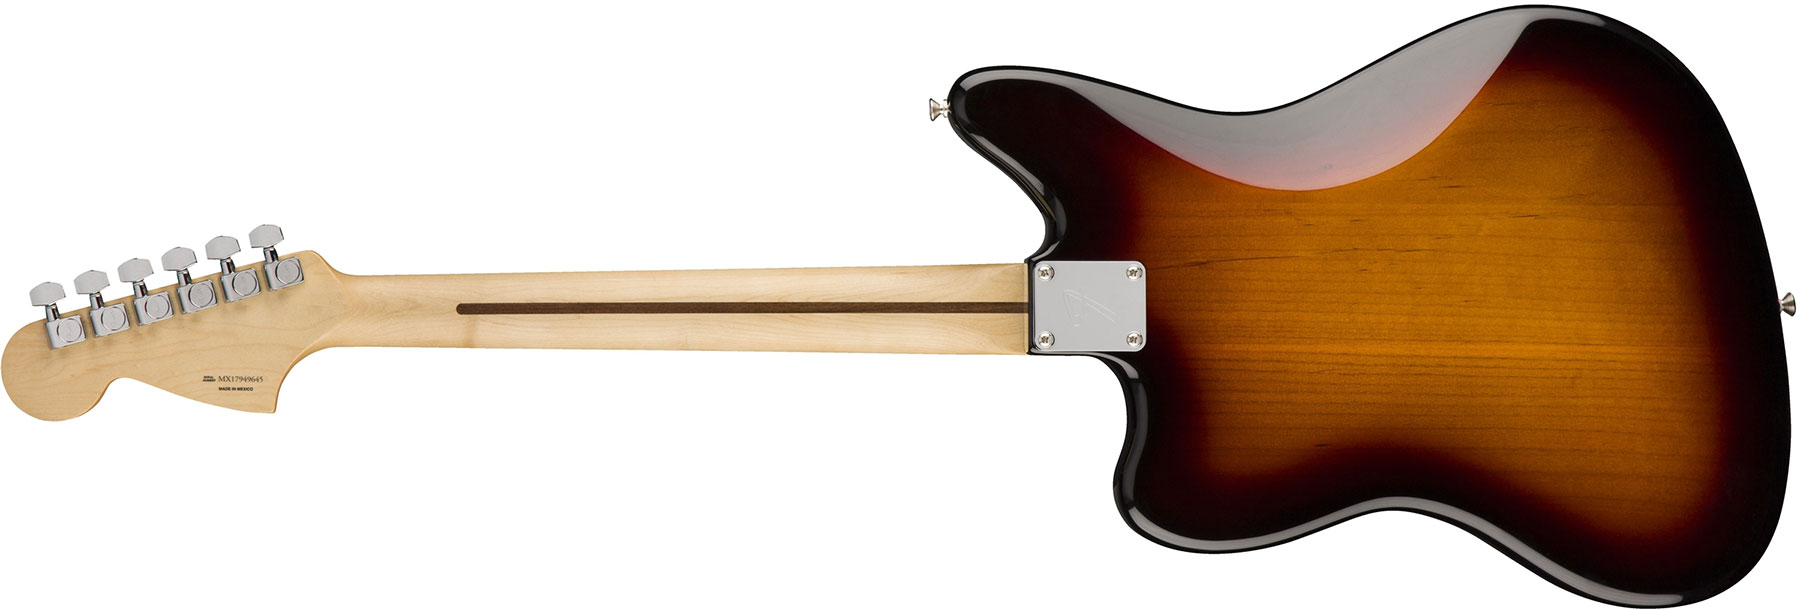 Fender Jaguar Player Mex Hs Pf - 3-color Sunburst - Retro rock electric guitar - Variation 1